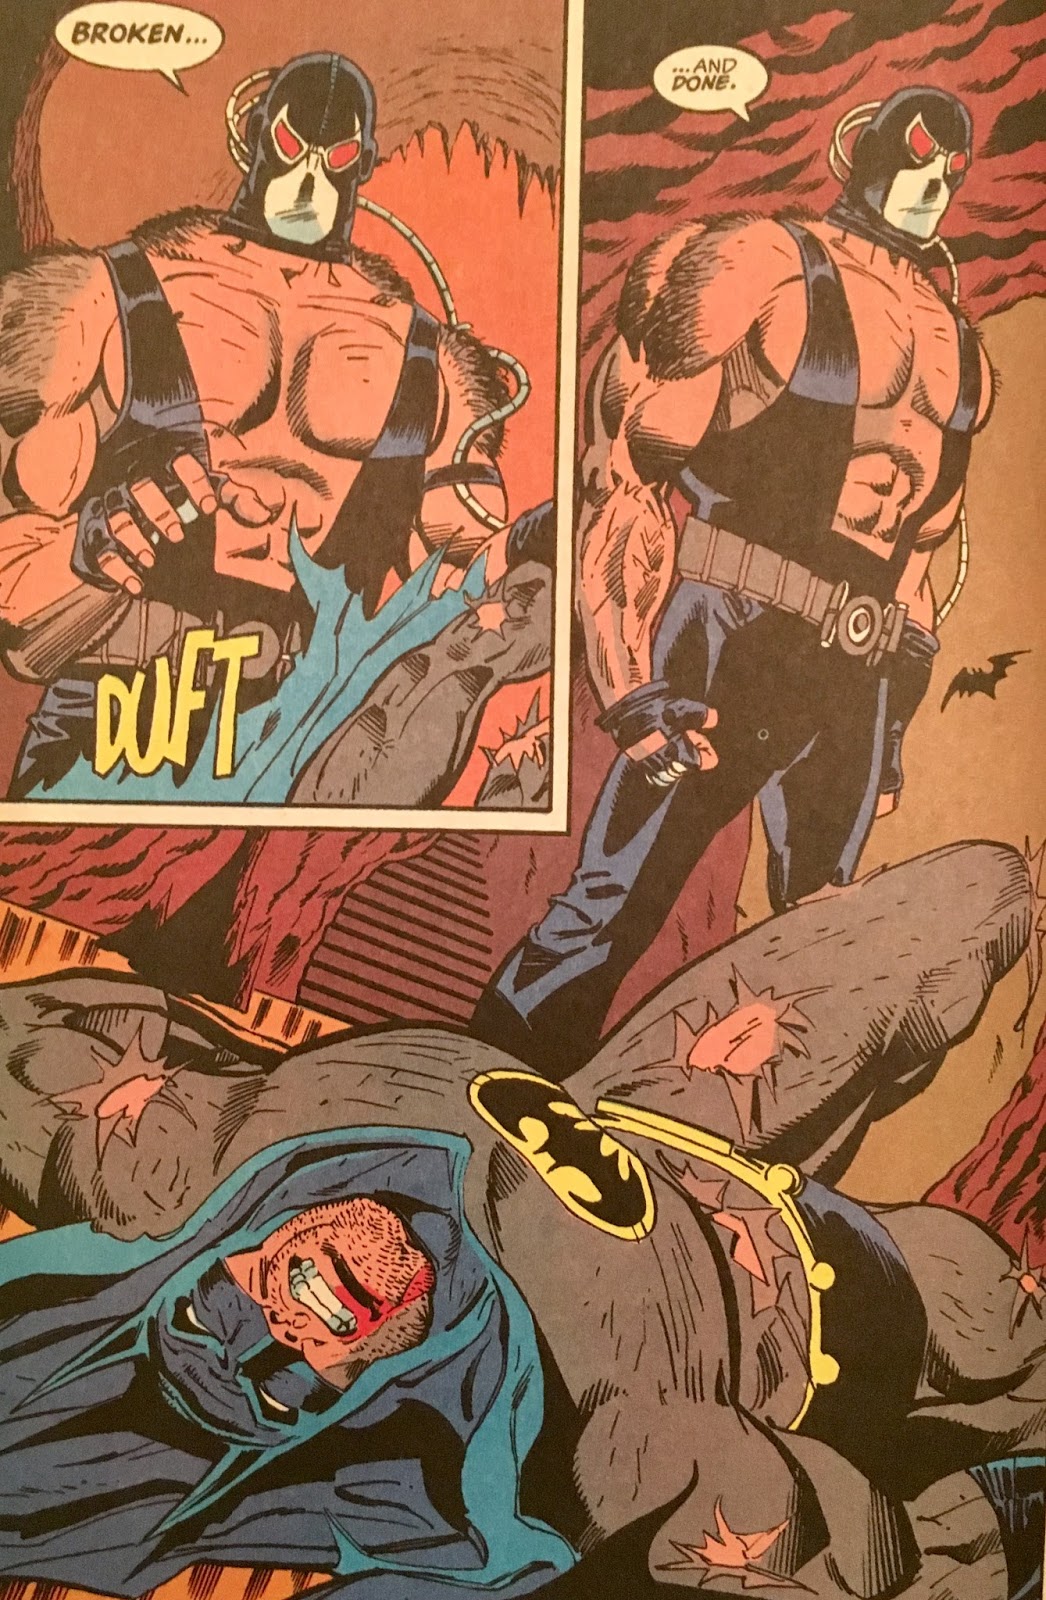 Batman #497 (1993) – Chris is on Infinite Earths